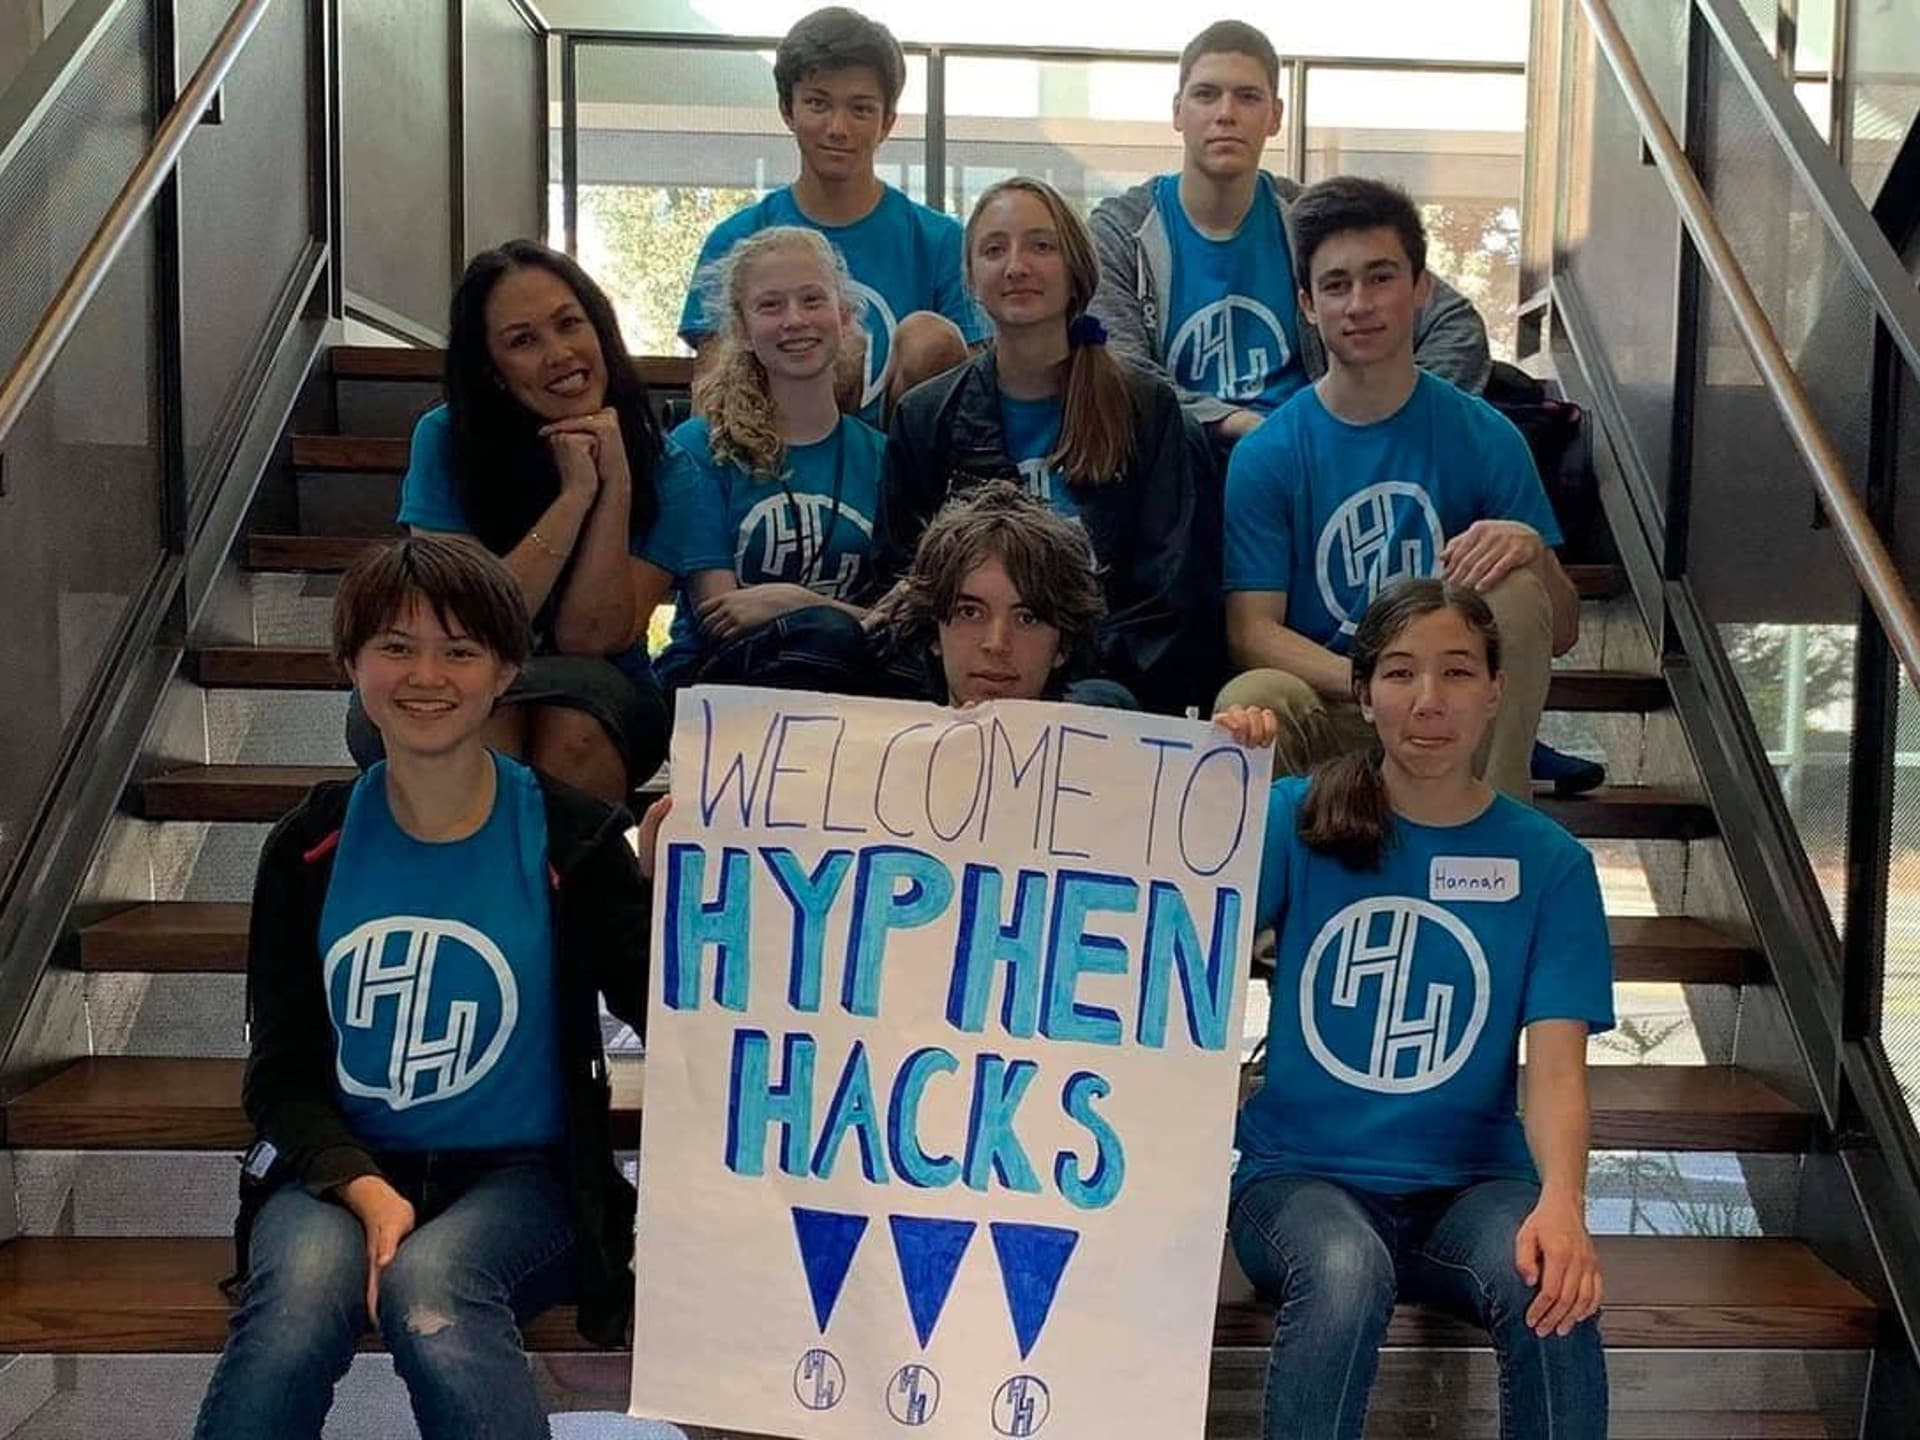 The Hyphen-Hacks 2020 team